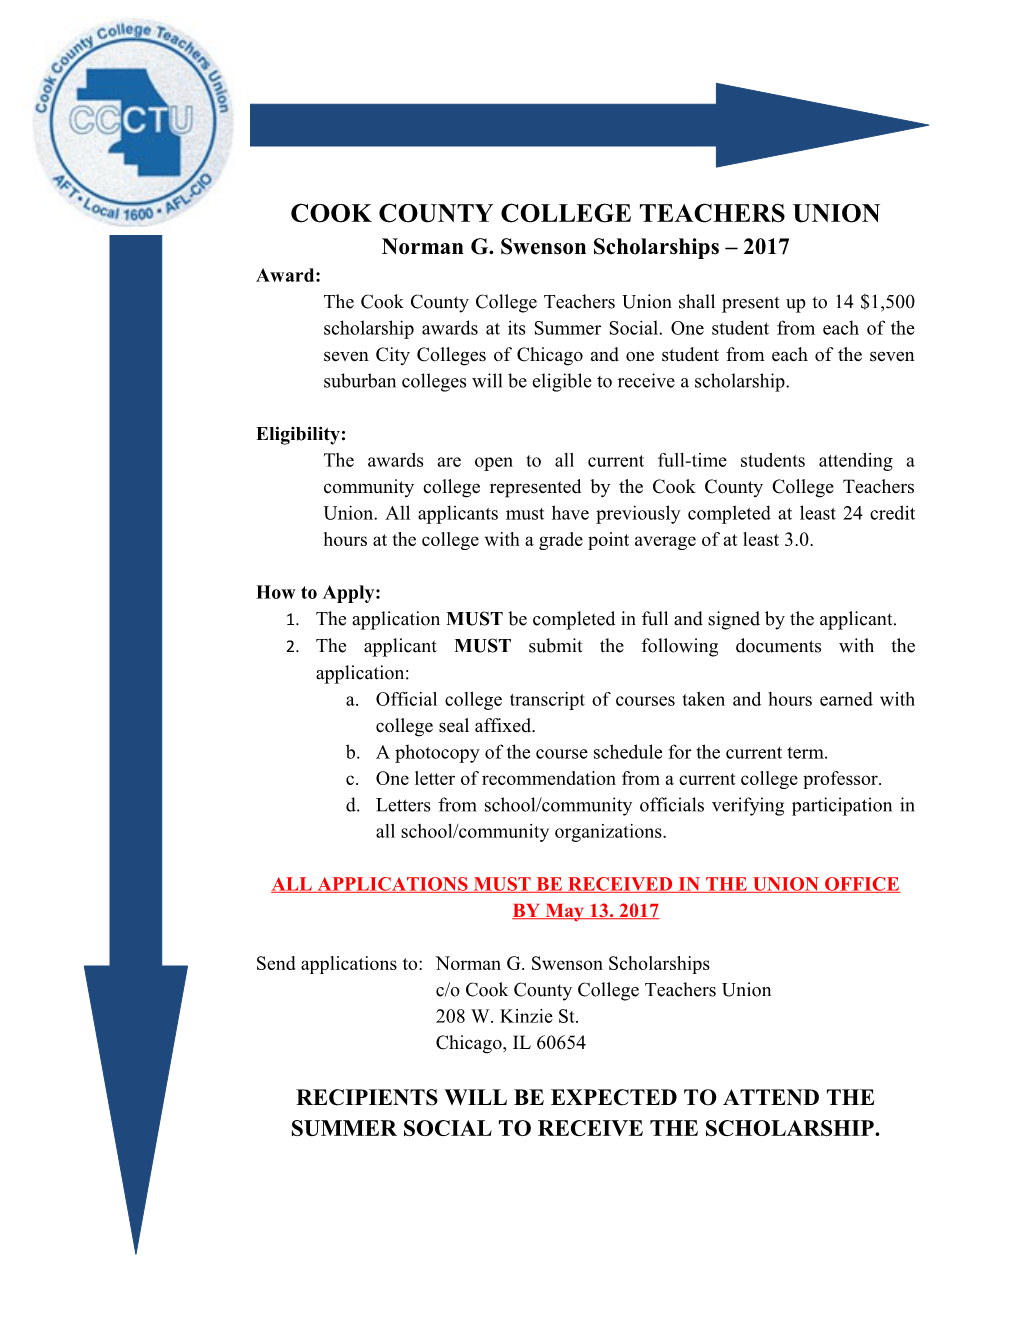 Cook County College Teachers Union